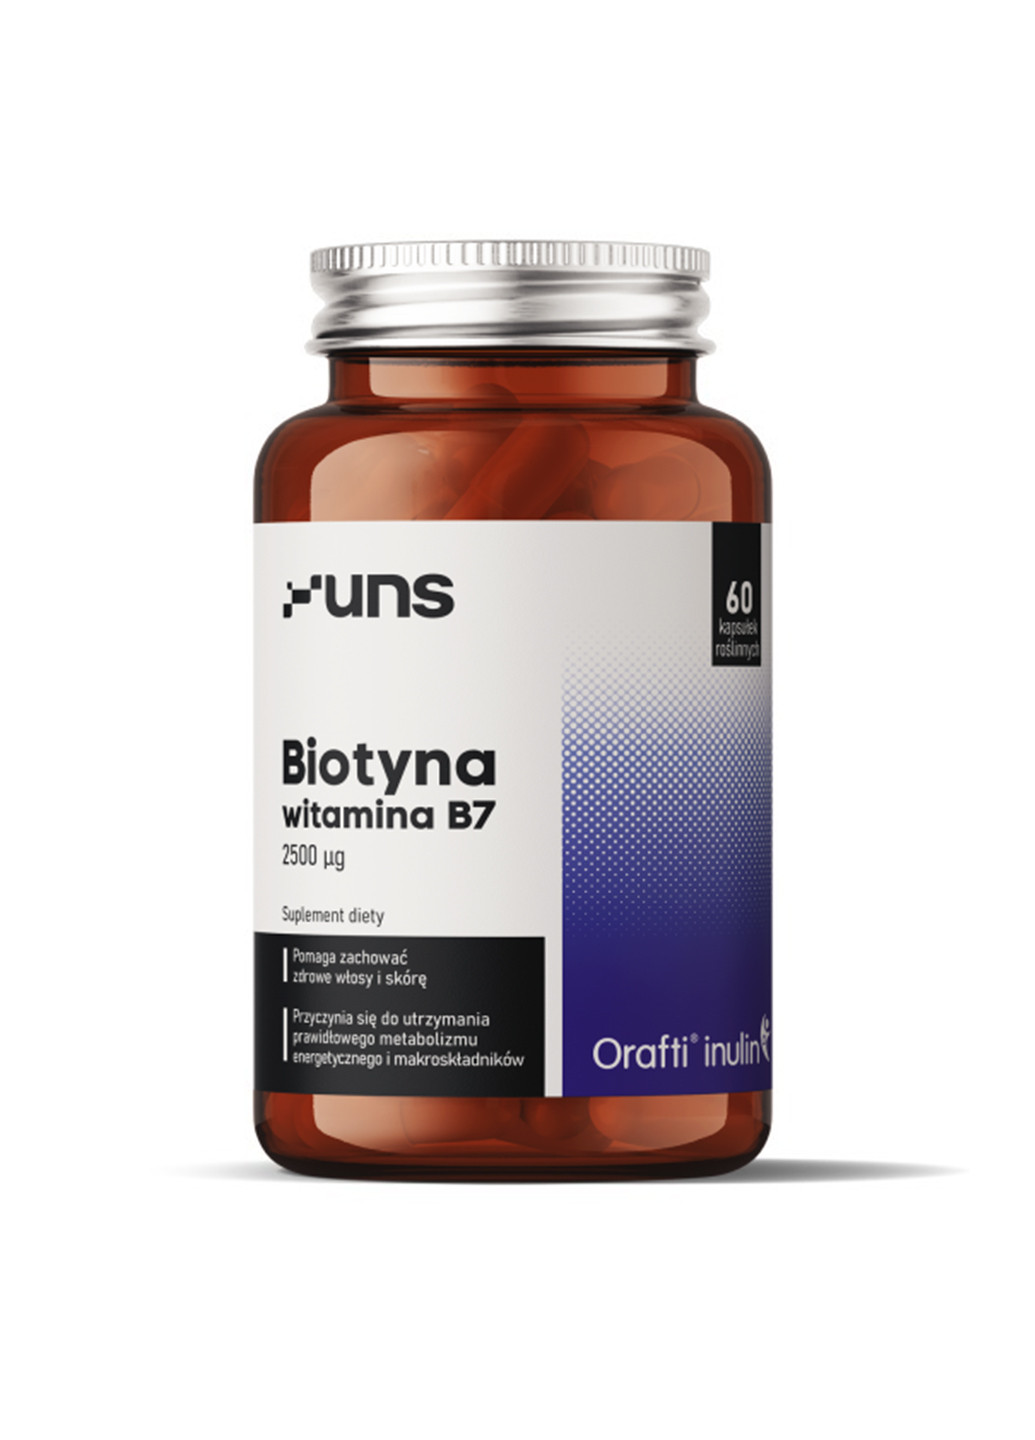 Биотин для волос Biotyna 2500 - 60caps UNS Vitamins (239155064)